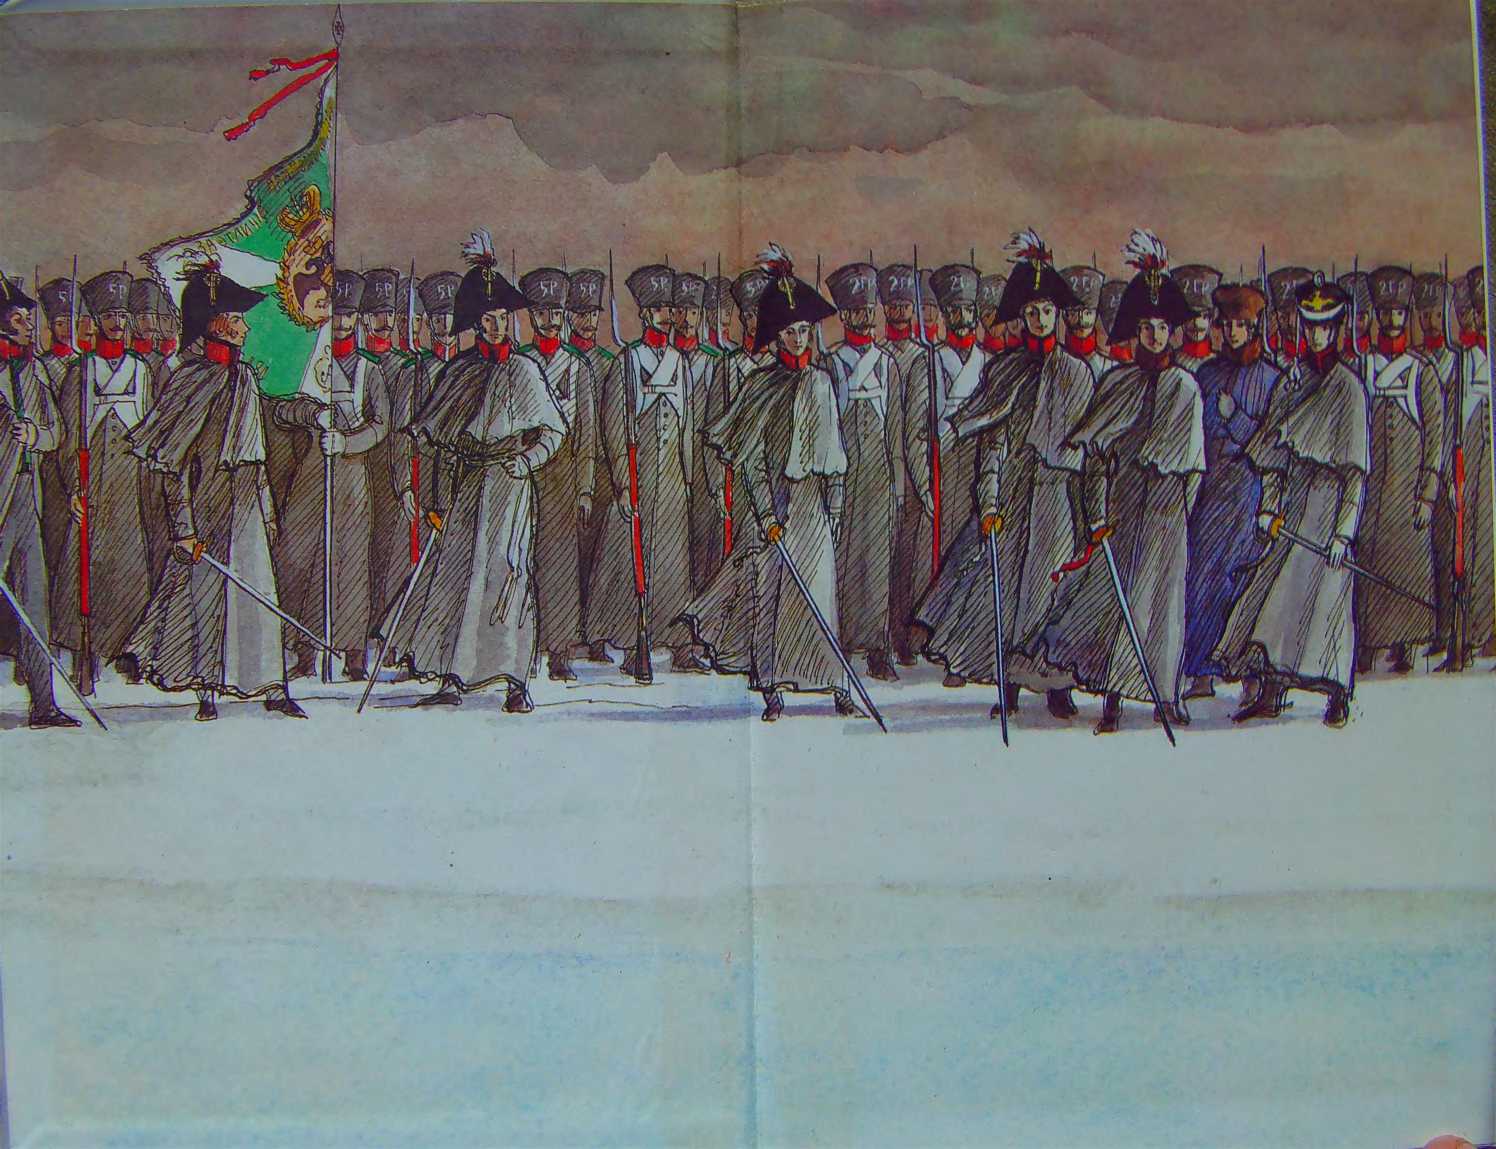 восстание семеновского полка год